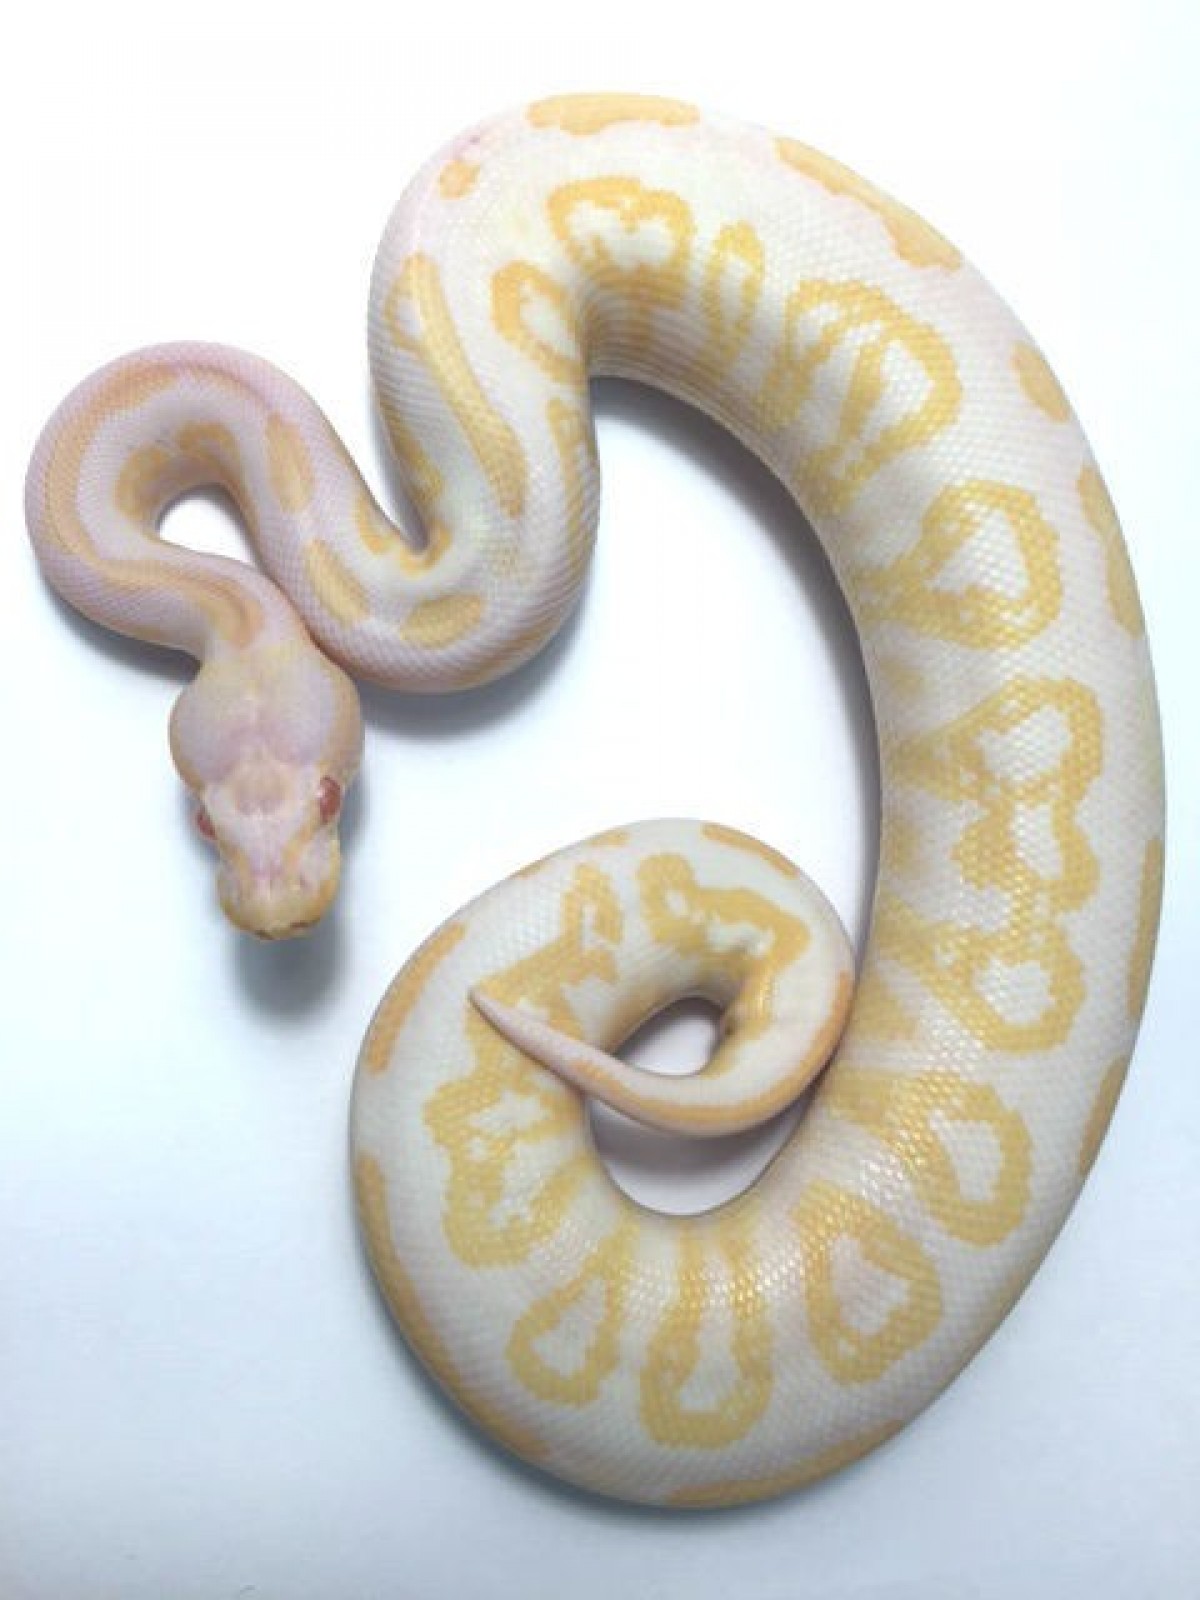 Albino Black Pastel Ball Python for sale (Python regius)n.